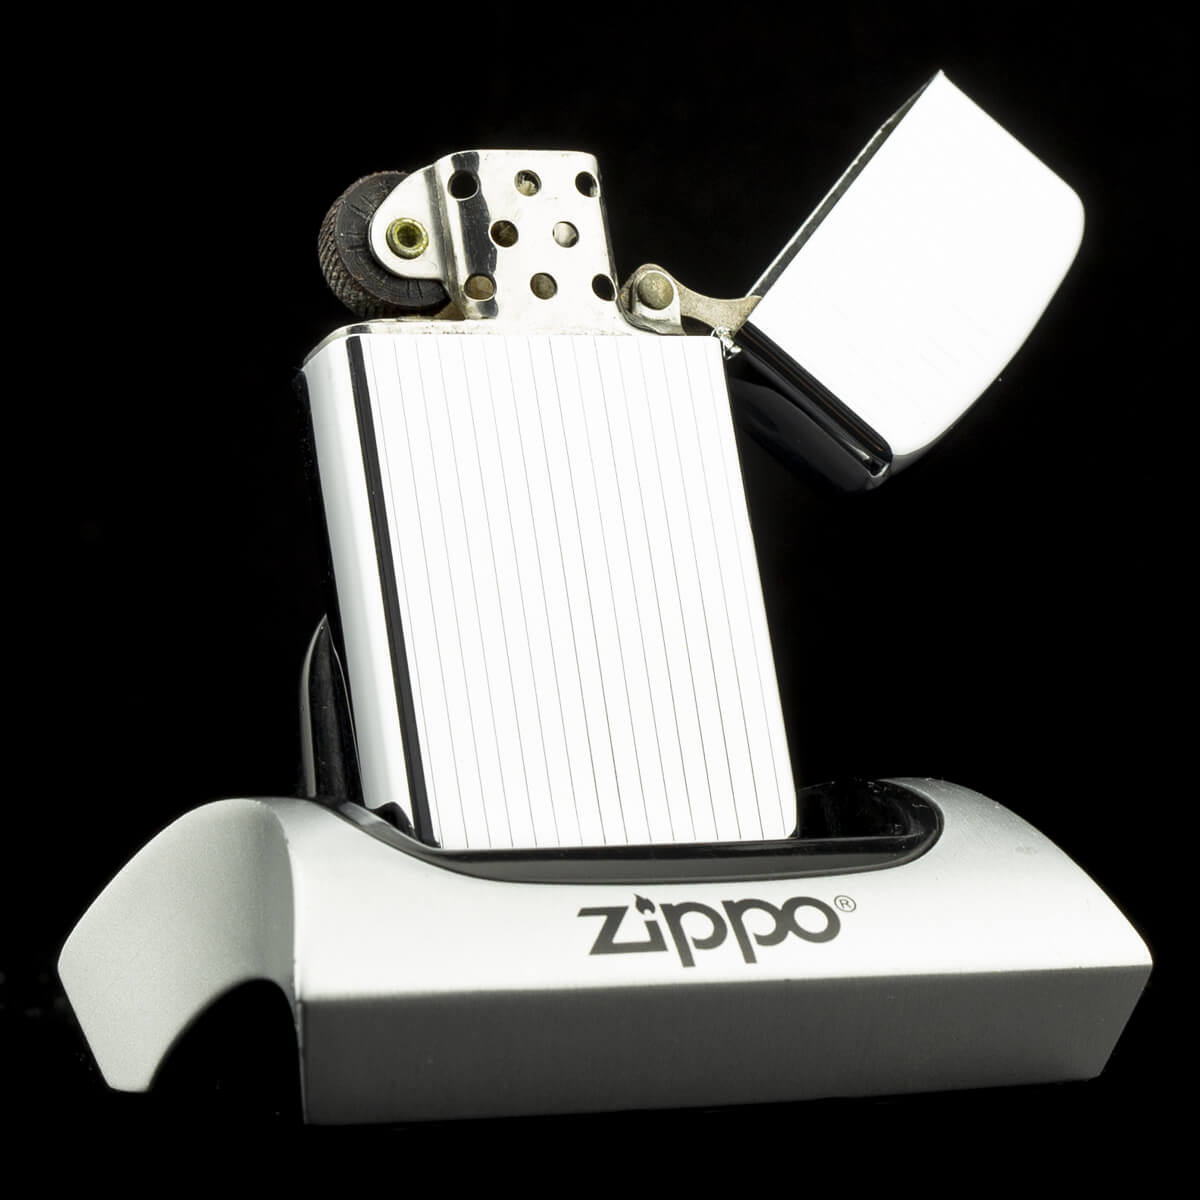 bat-lua-zippo-slim-striped-1966-8-gach-thang-soc-2-mat-zippo-mini